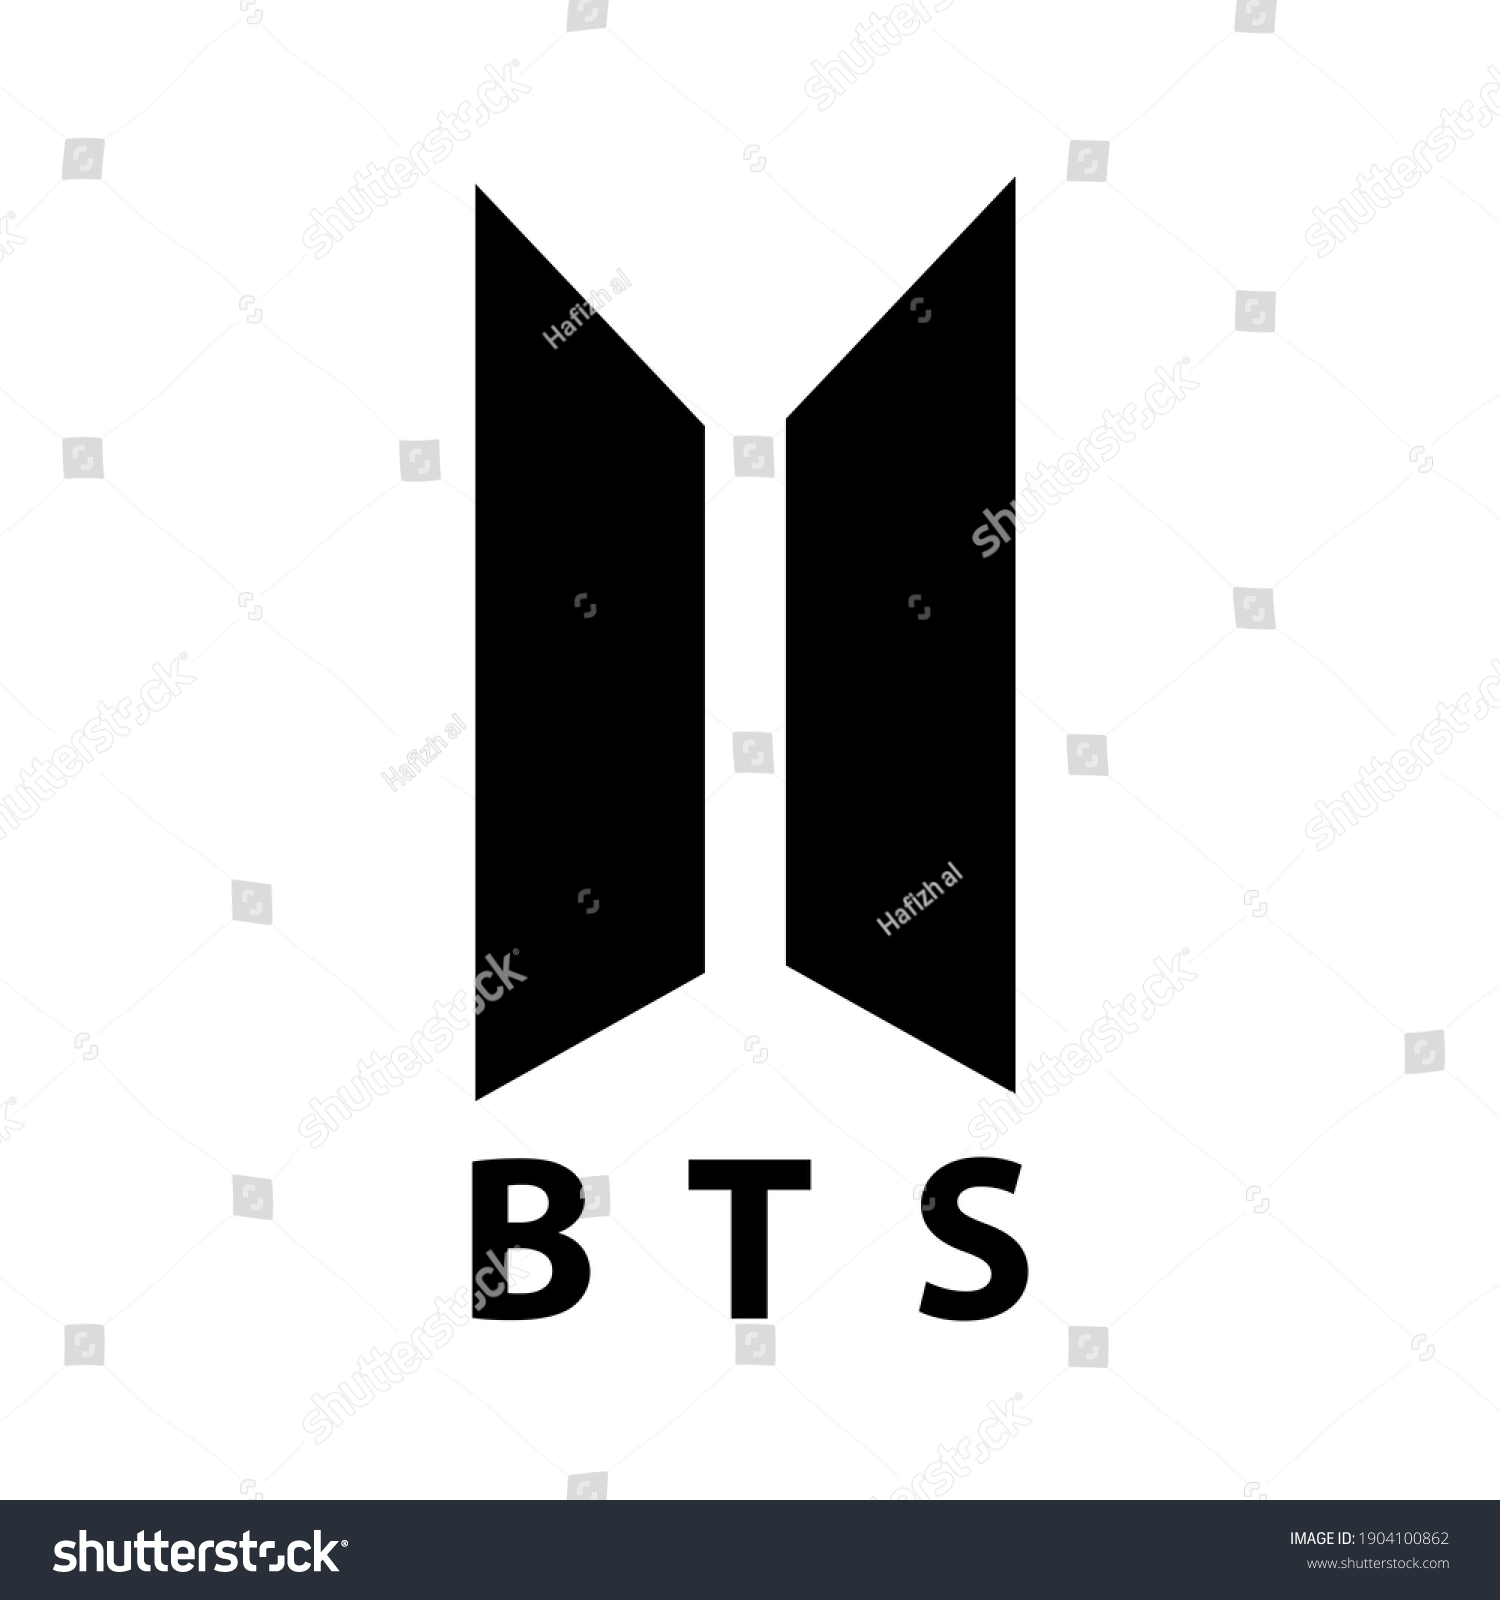 SVG of Logo BTS ,Bangtan Boys , new logo on white background. simple design for graphics, logos, websites, social media, UI, mobile apps, EPS10 svg